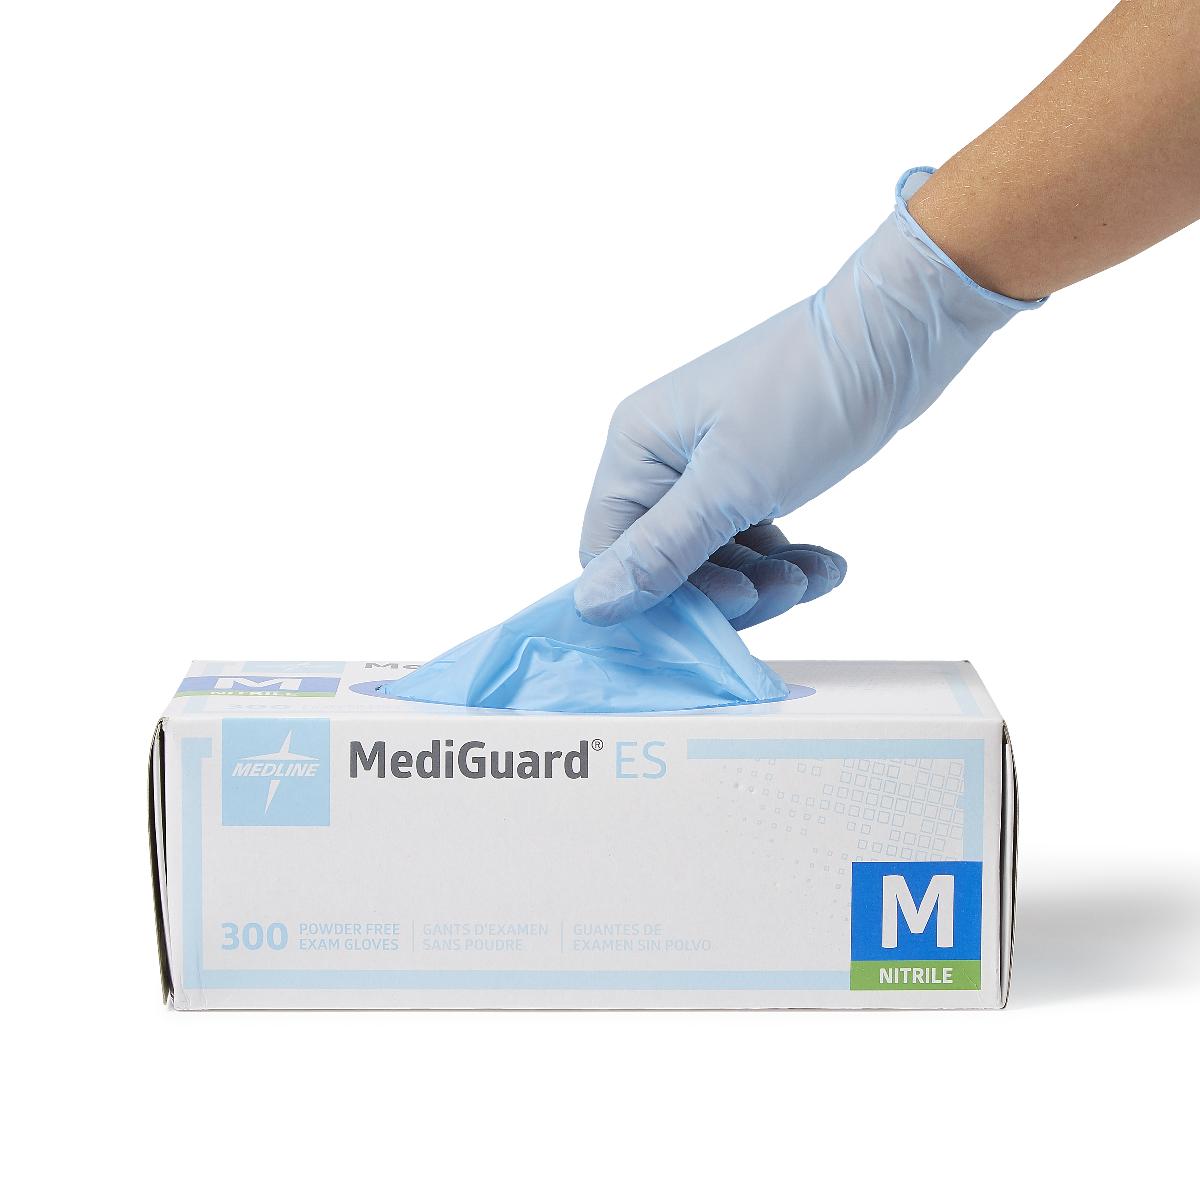 MediGuard® ES Powder-Free Latex-Free Nitrile Exam Gloves